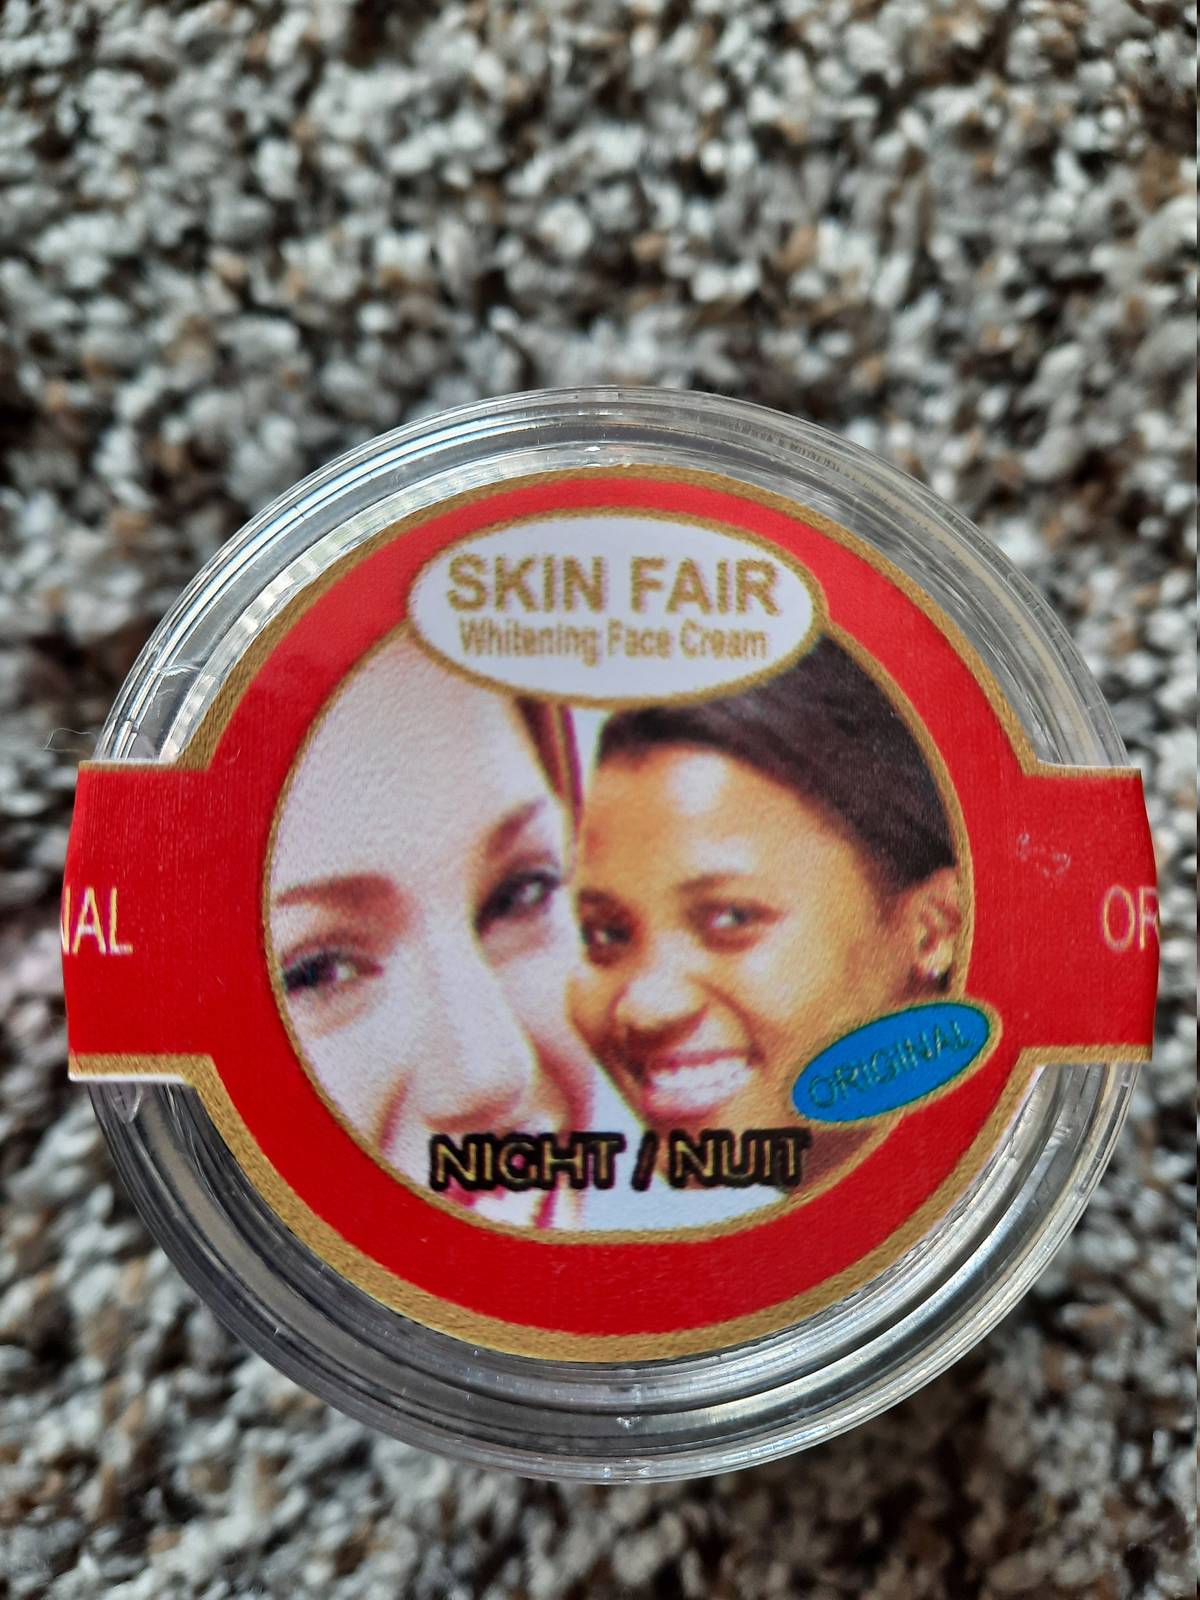 Primary image for Skin fair extra whitening face cream with collagen, glutathione +kojic acid etc